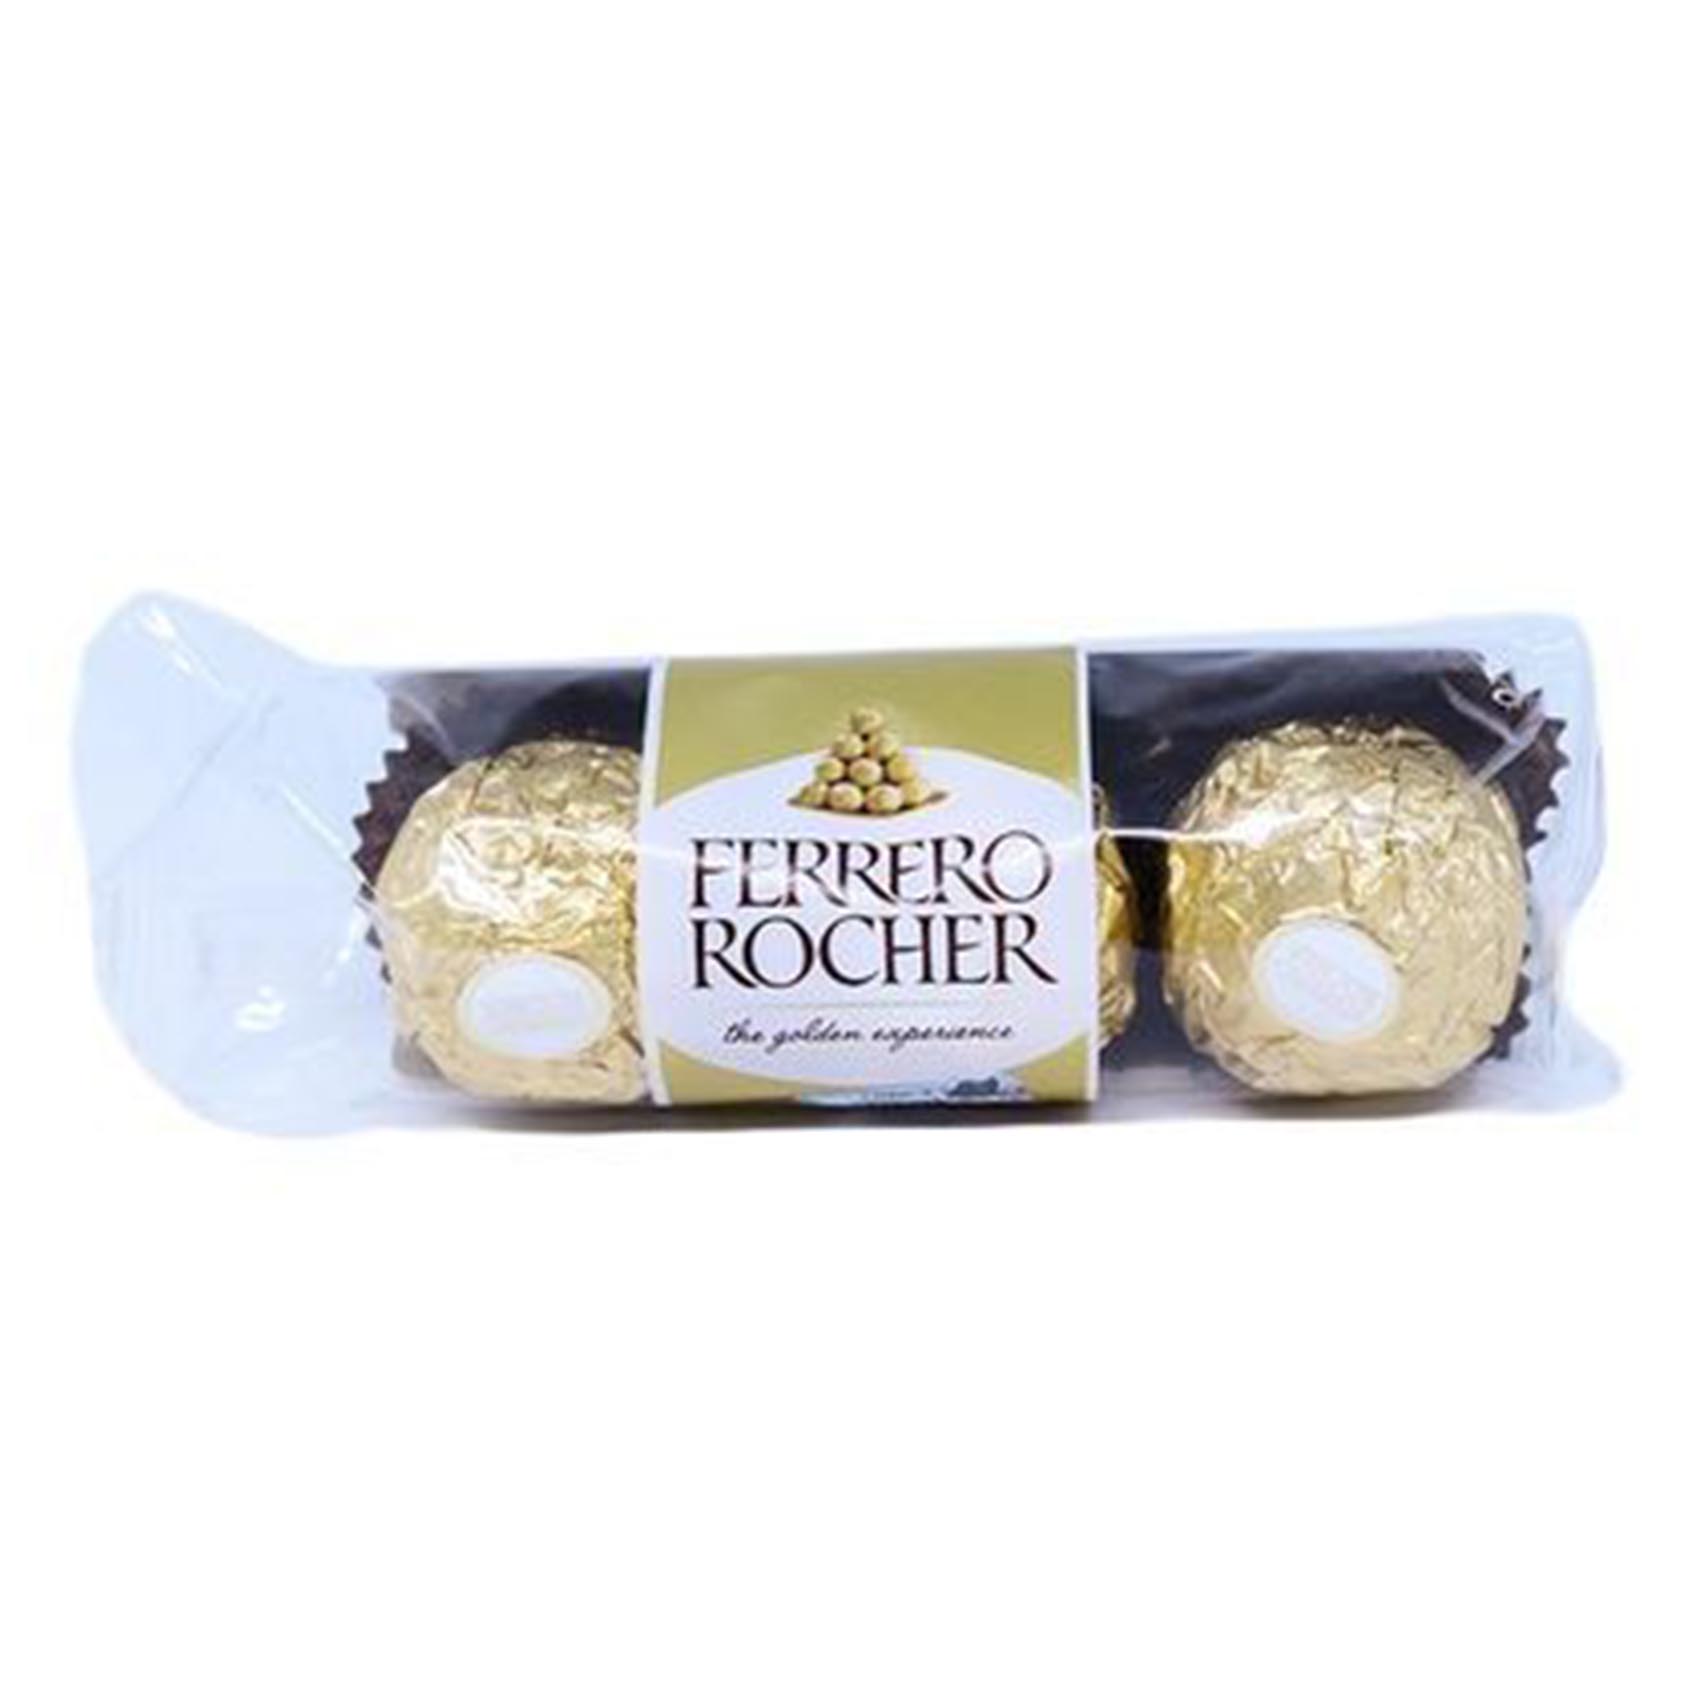 Ferrero Rocher T3 Imported Chocolates 37.5g